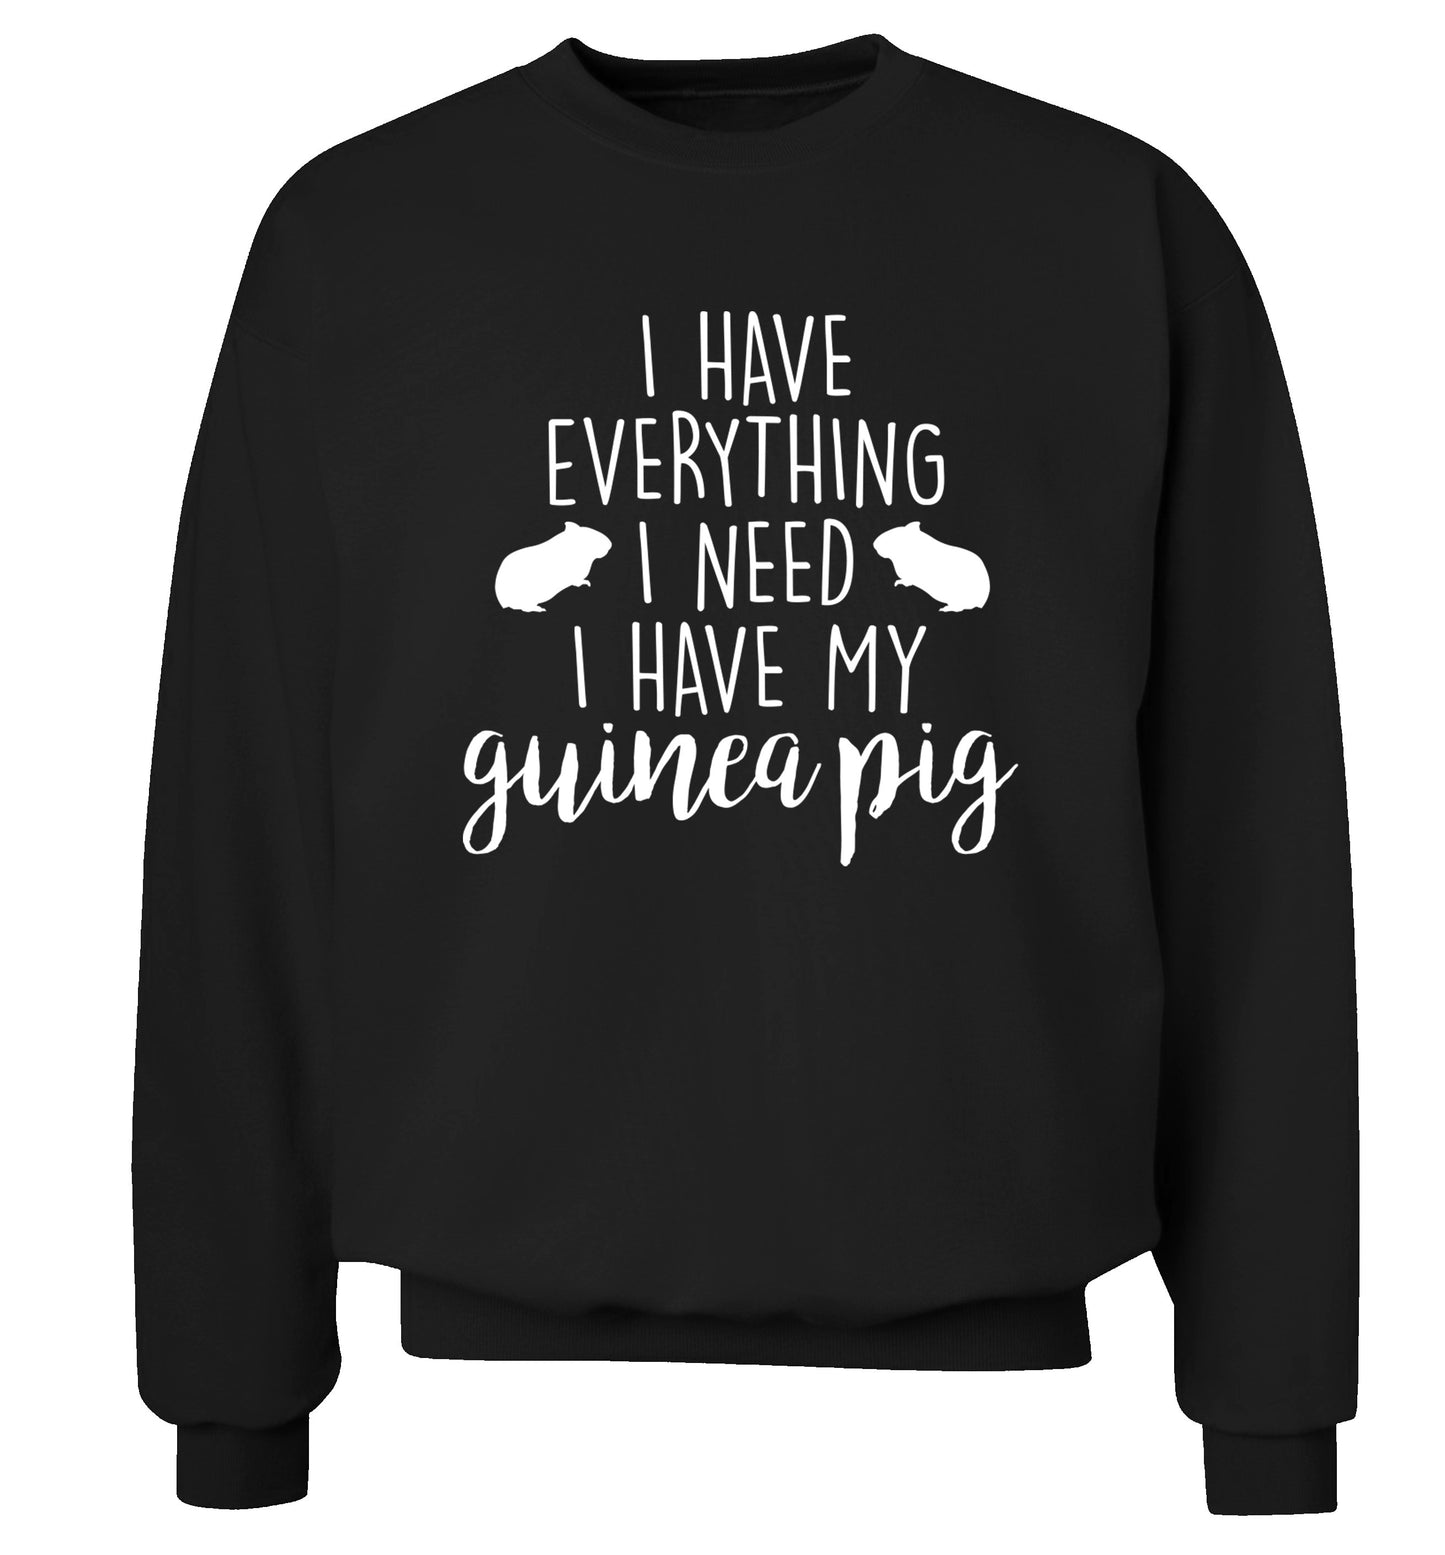 I have everything I need, I have my guinea pig Adult's unisex black  sweater 2XL